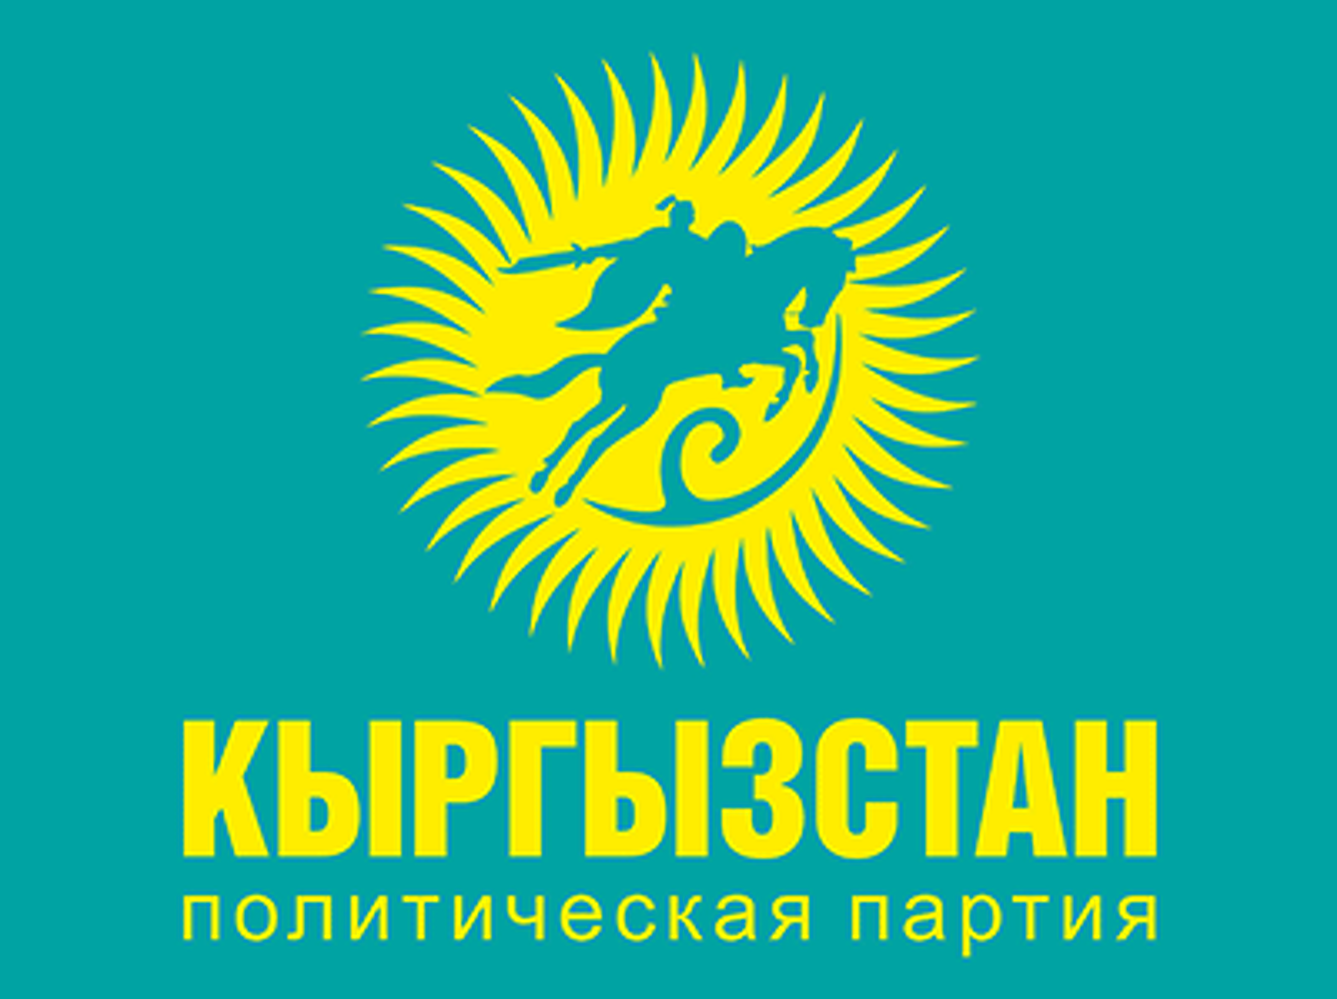 Партия Кыргызстан проведет съезд — Today.kg